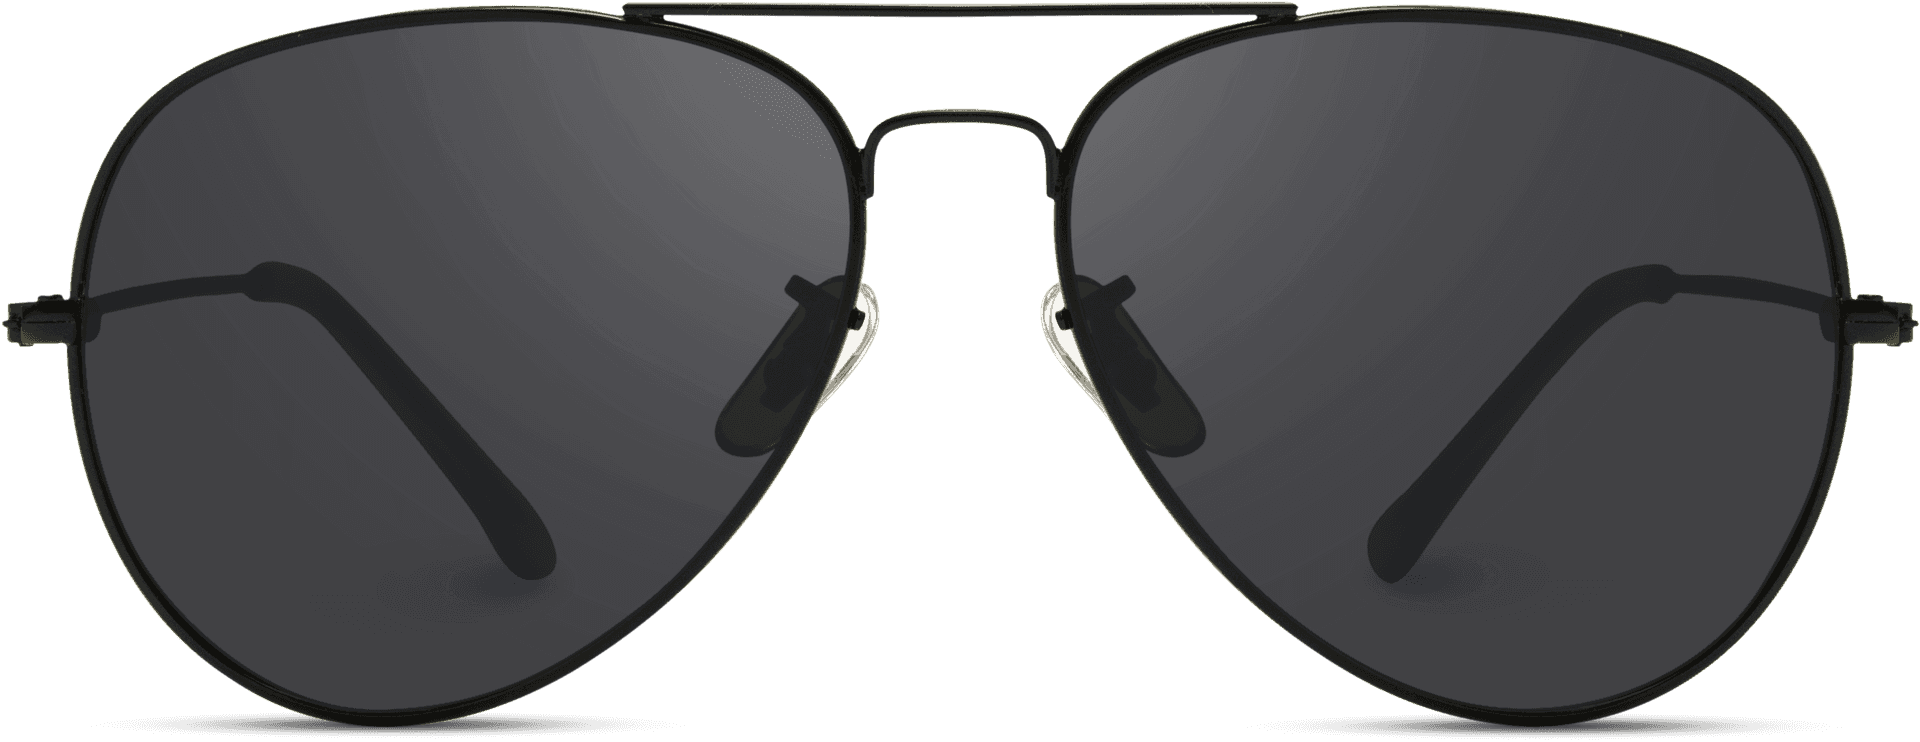 Download Black Aviator Sunglasses | Wallpapers.com